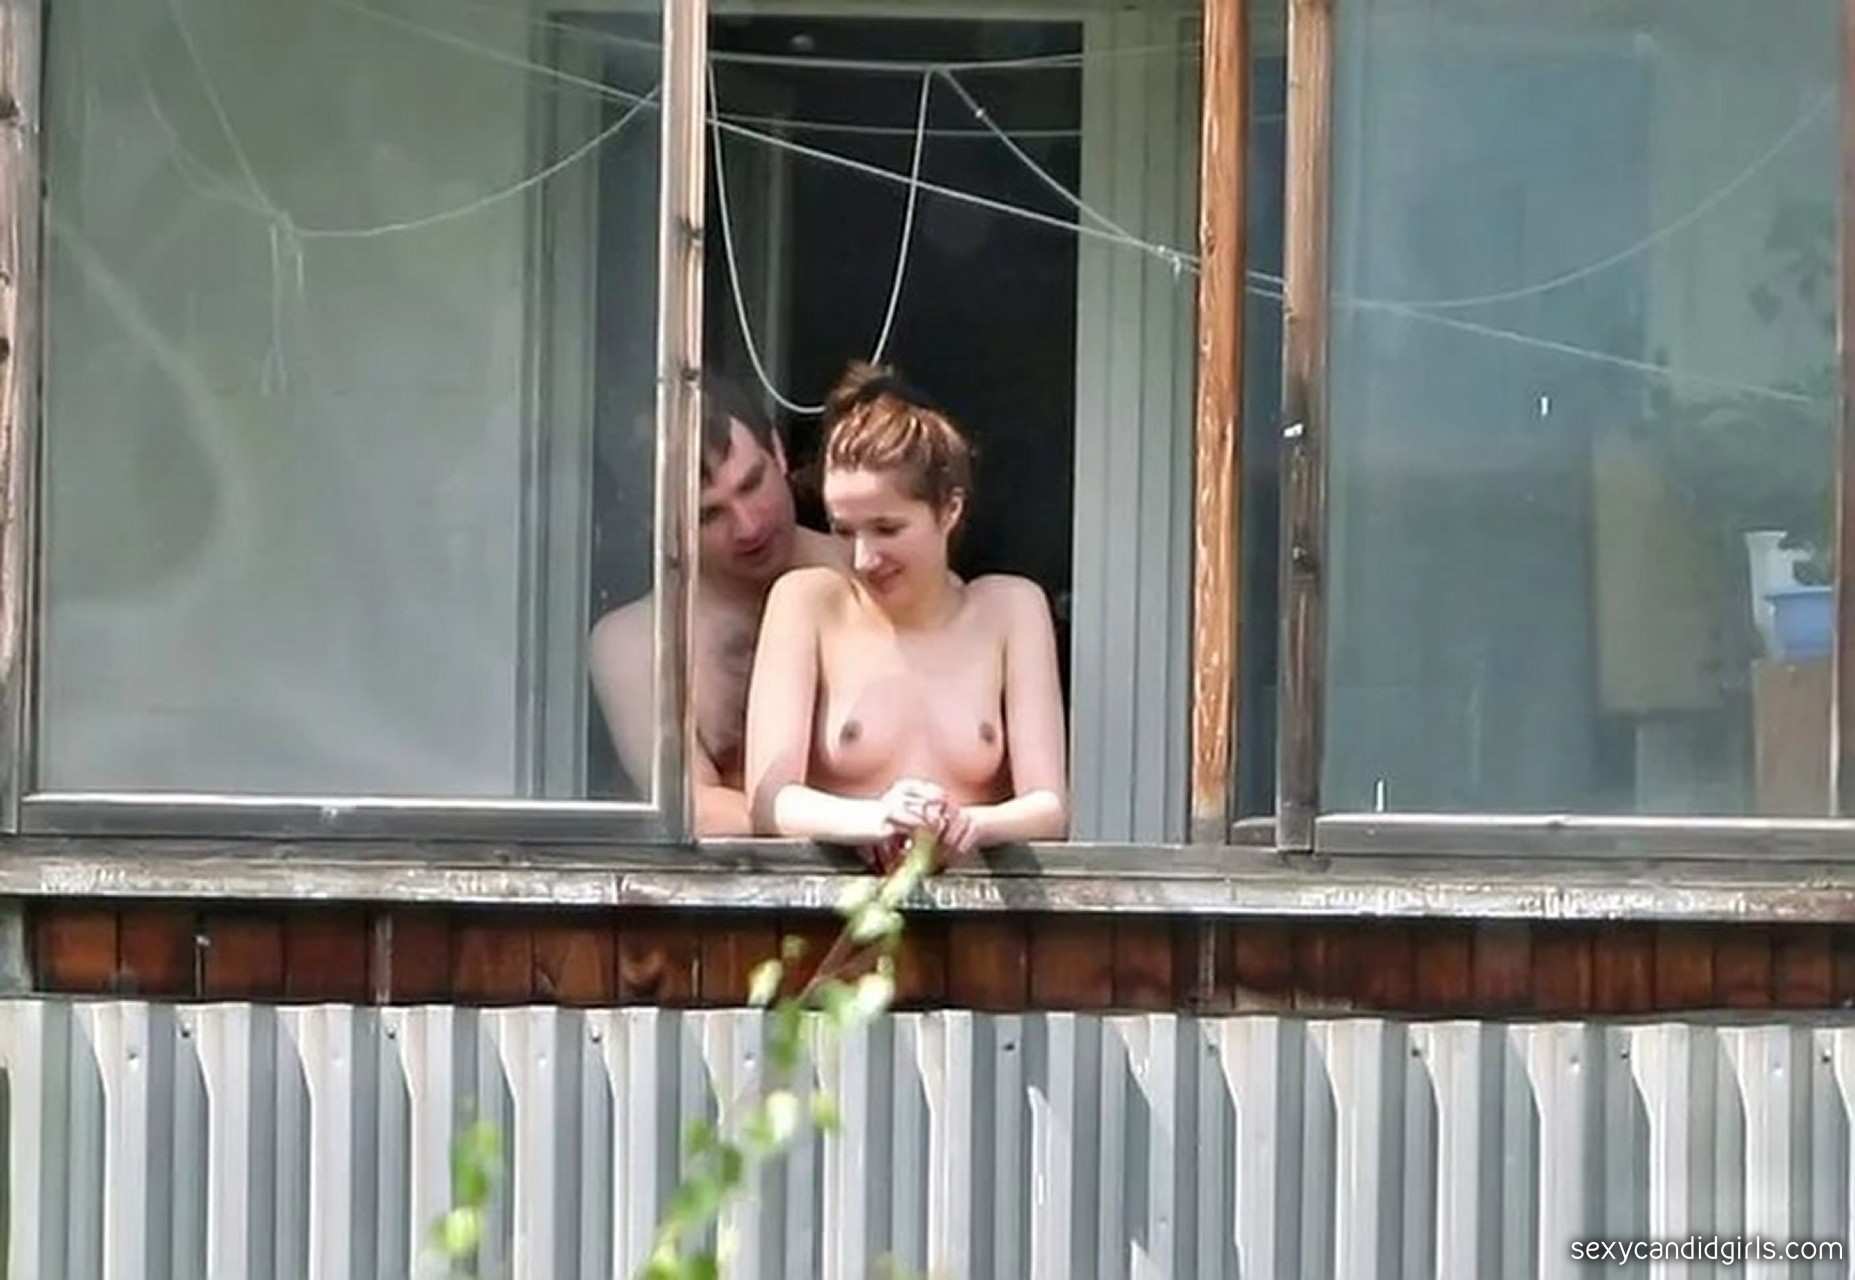 spying on nude girlfriends